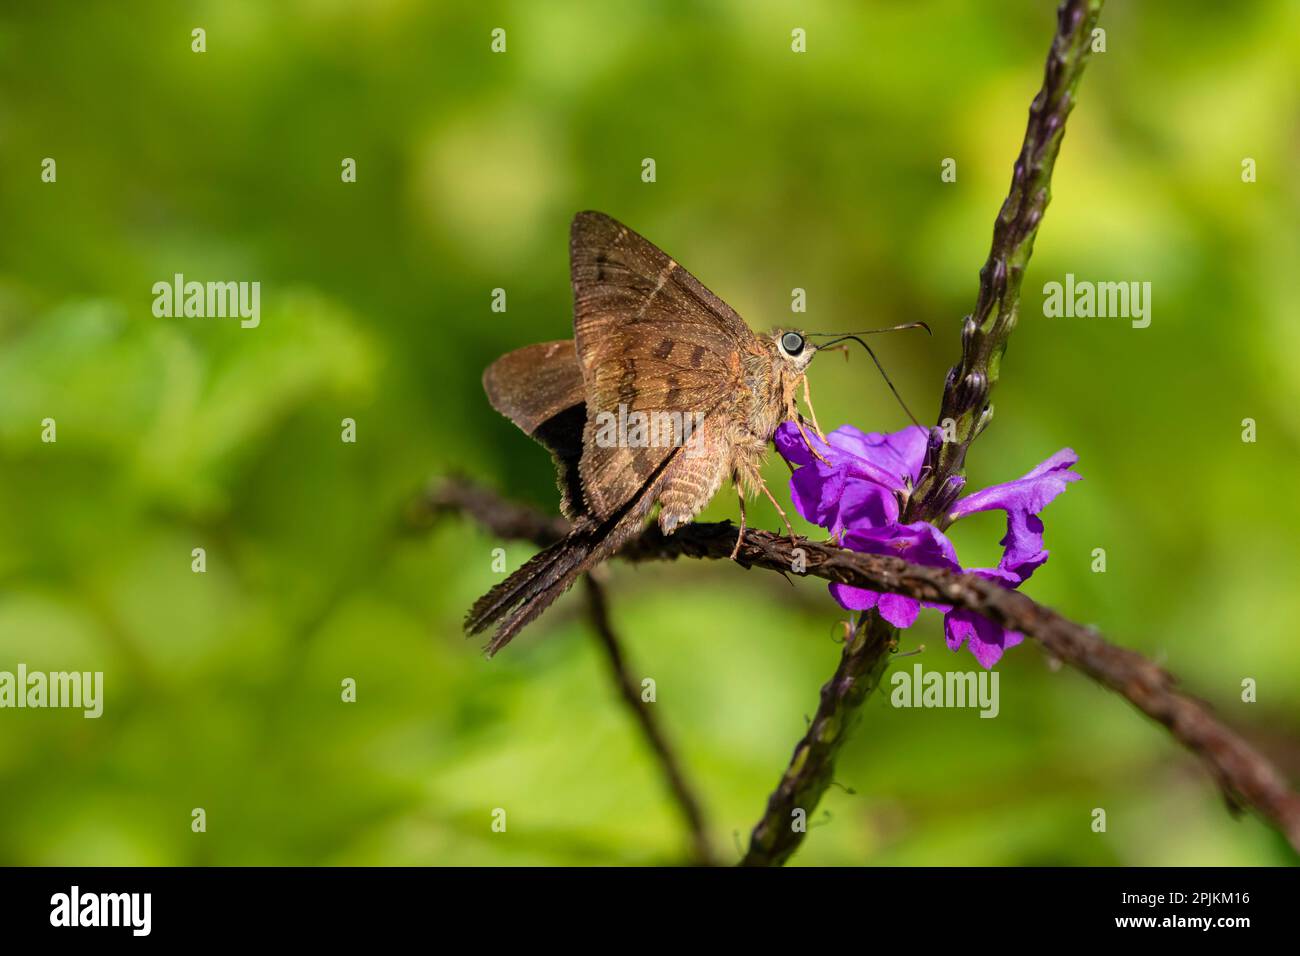 Teleus netting farfalla coda lunga in giardino fiorito Foto Stock